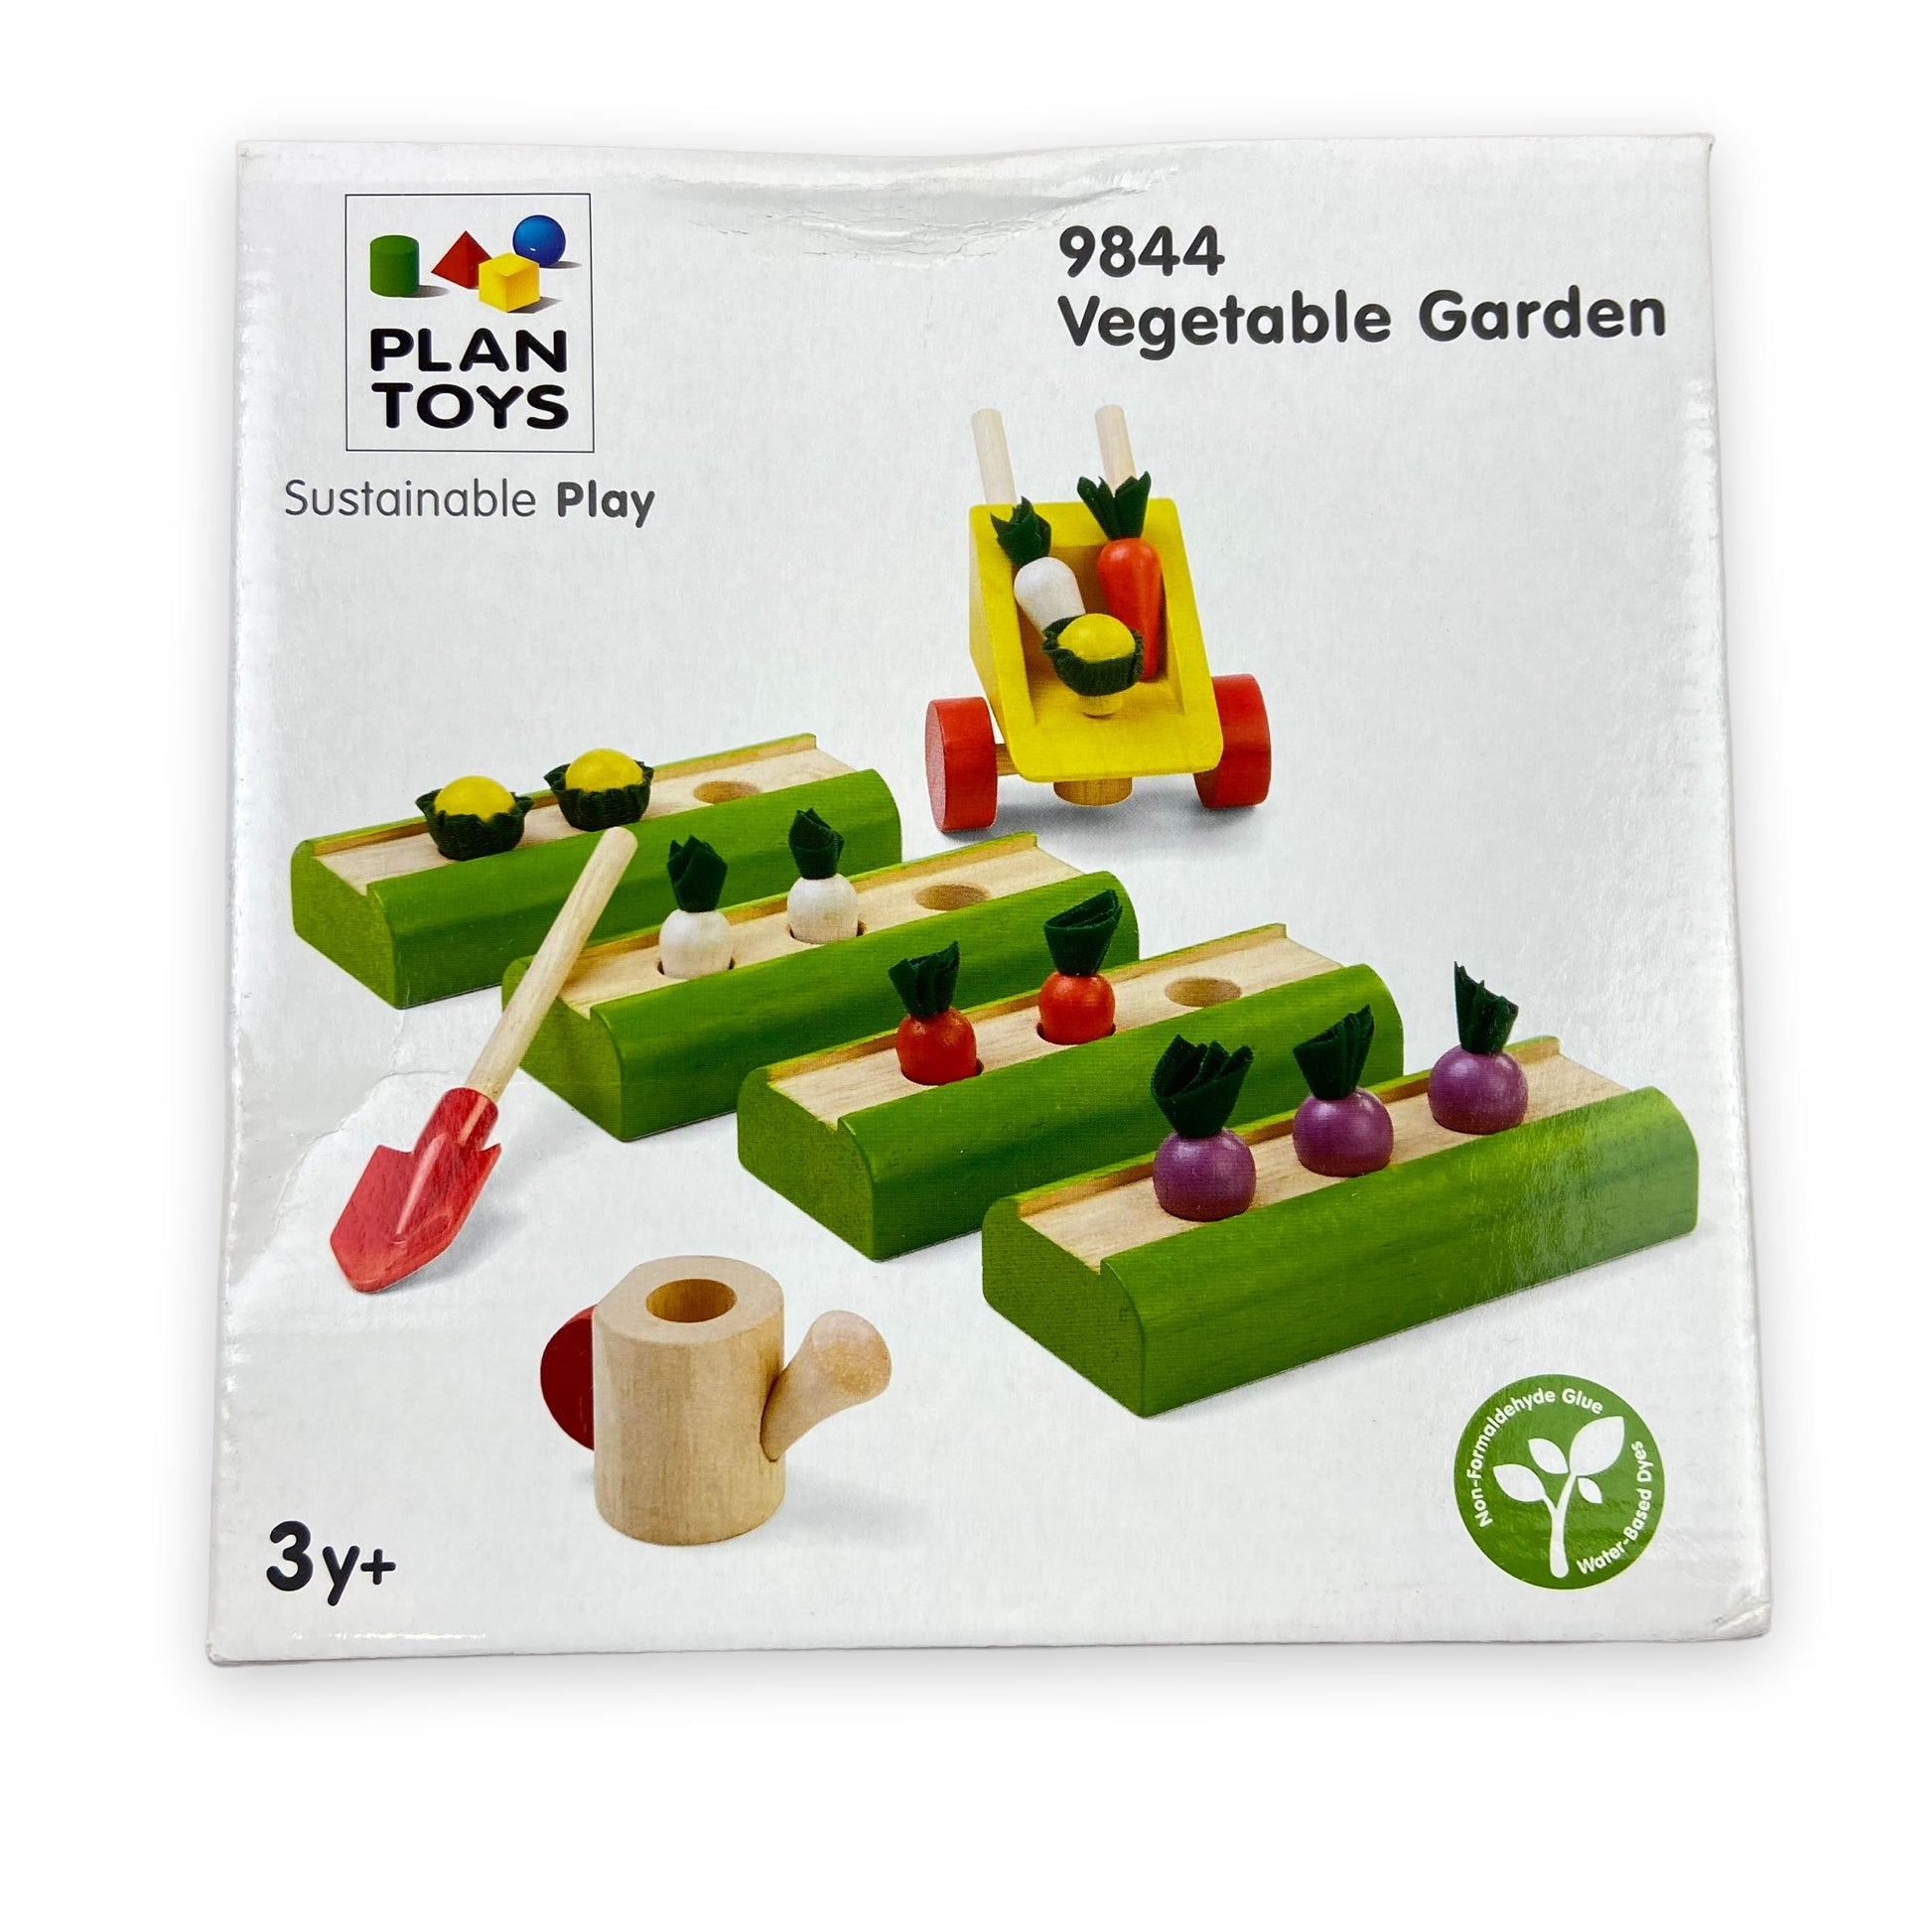 PlanToys Vegetable Garden 